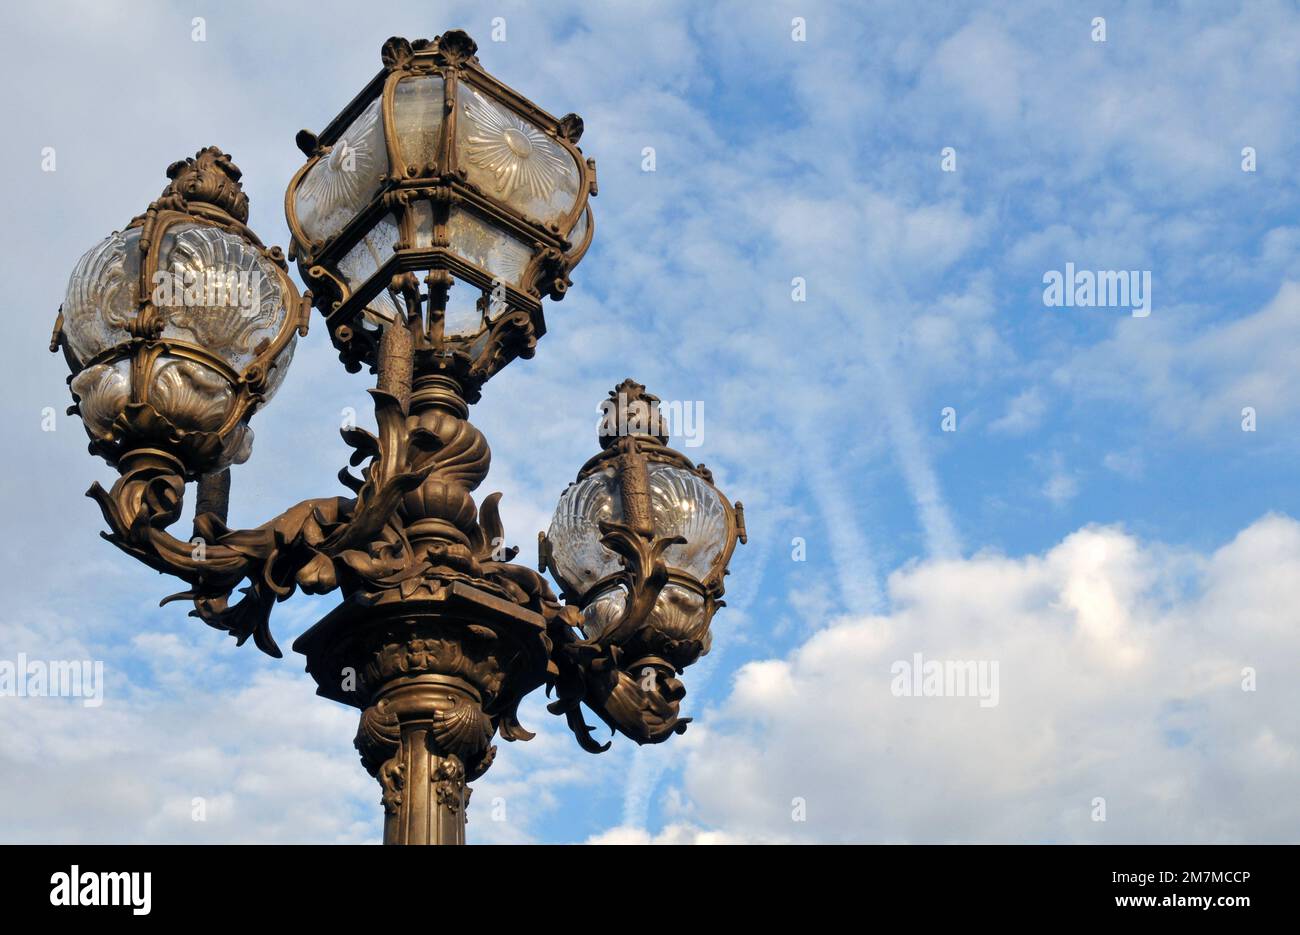 An ornate Art Nouveau street lamp on the landmark Pont Alexandre III bridge against a partly cloudy sky in Paris. Stock Photo